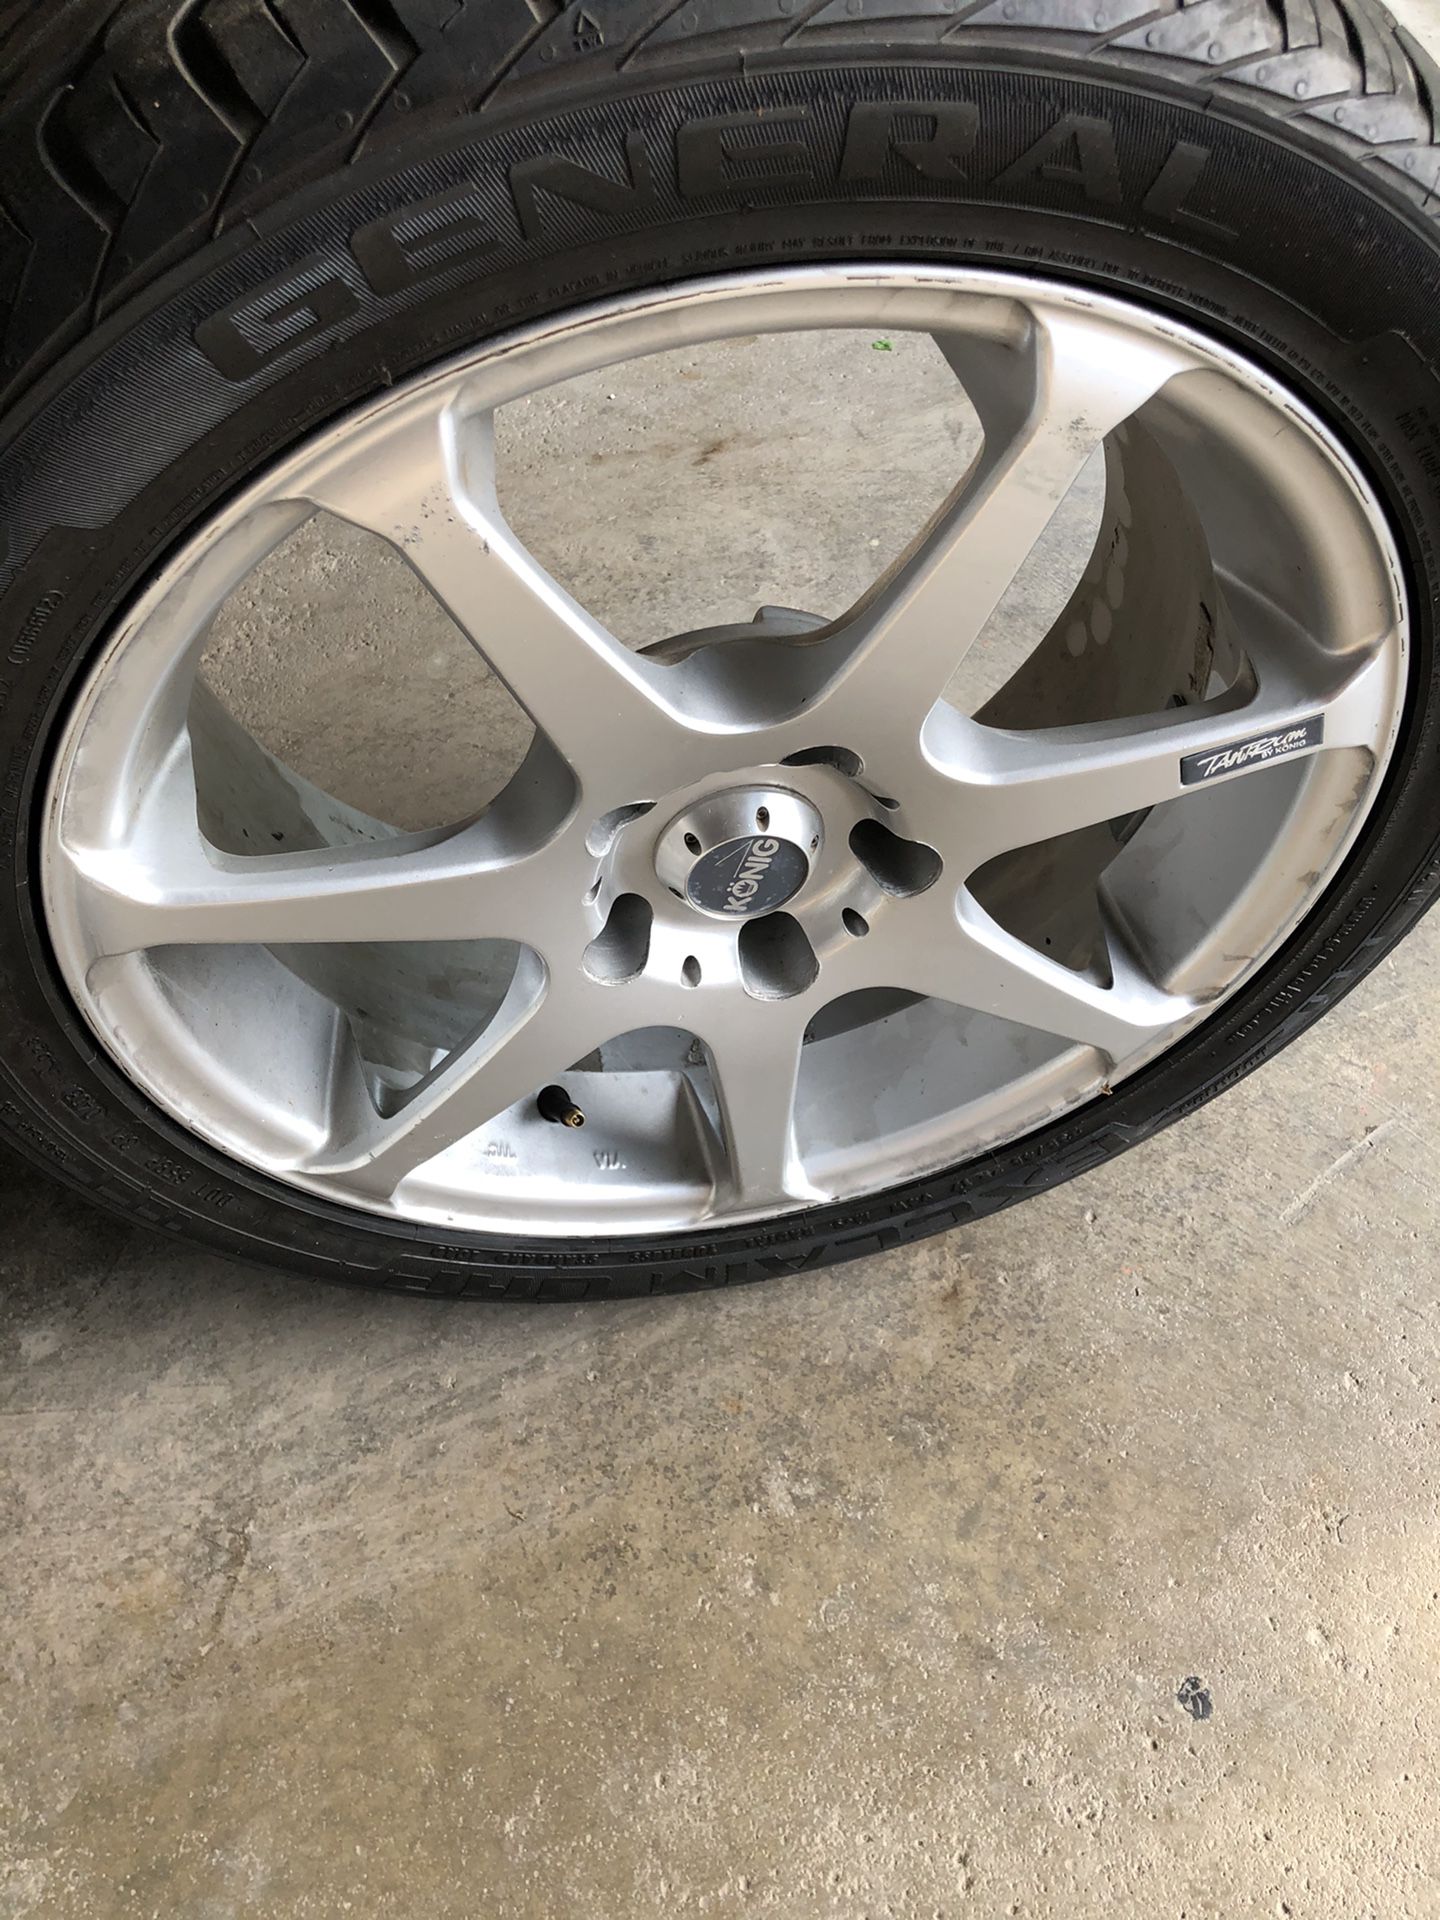 Konig wheels and tires